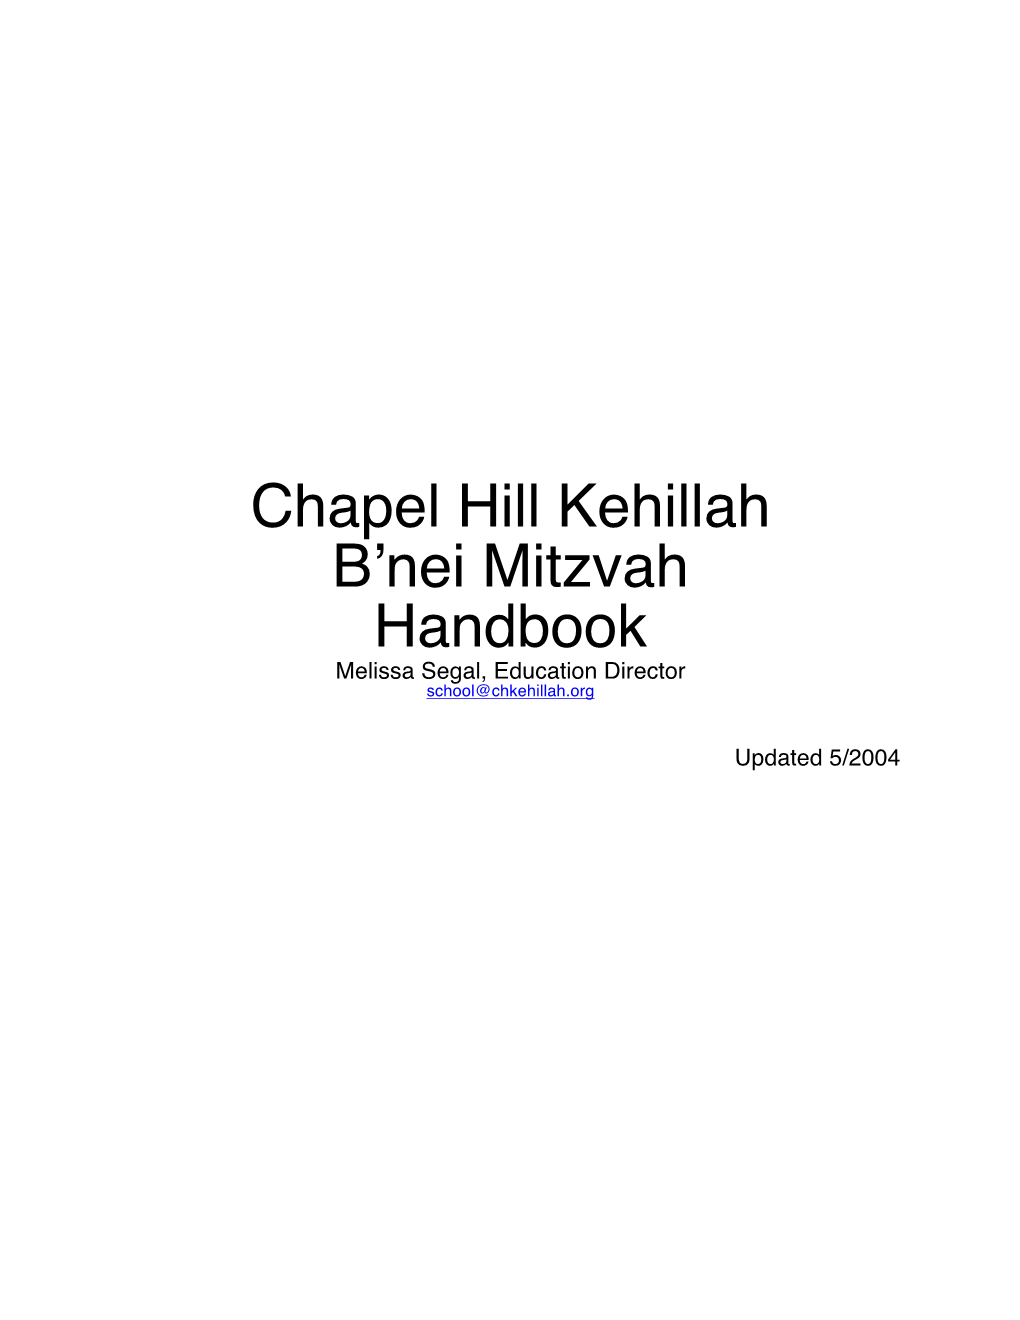 Chapel Hill Kehillah B'nei Mitzvah Handbook